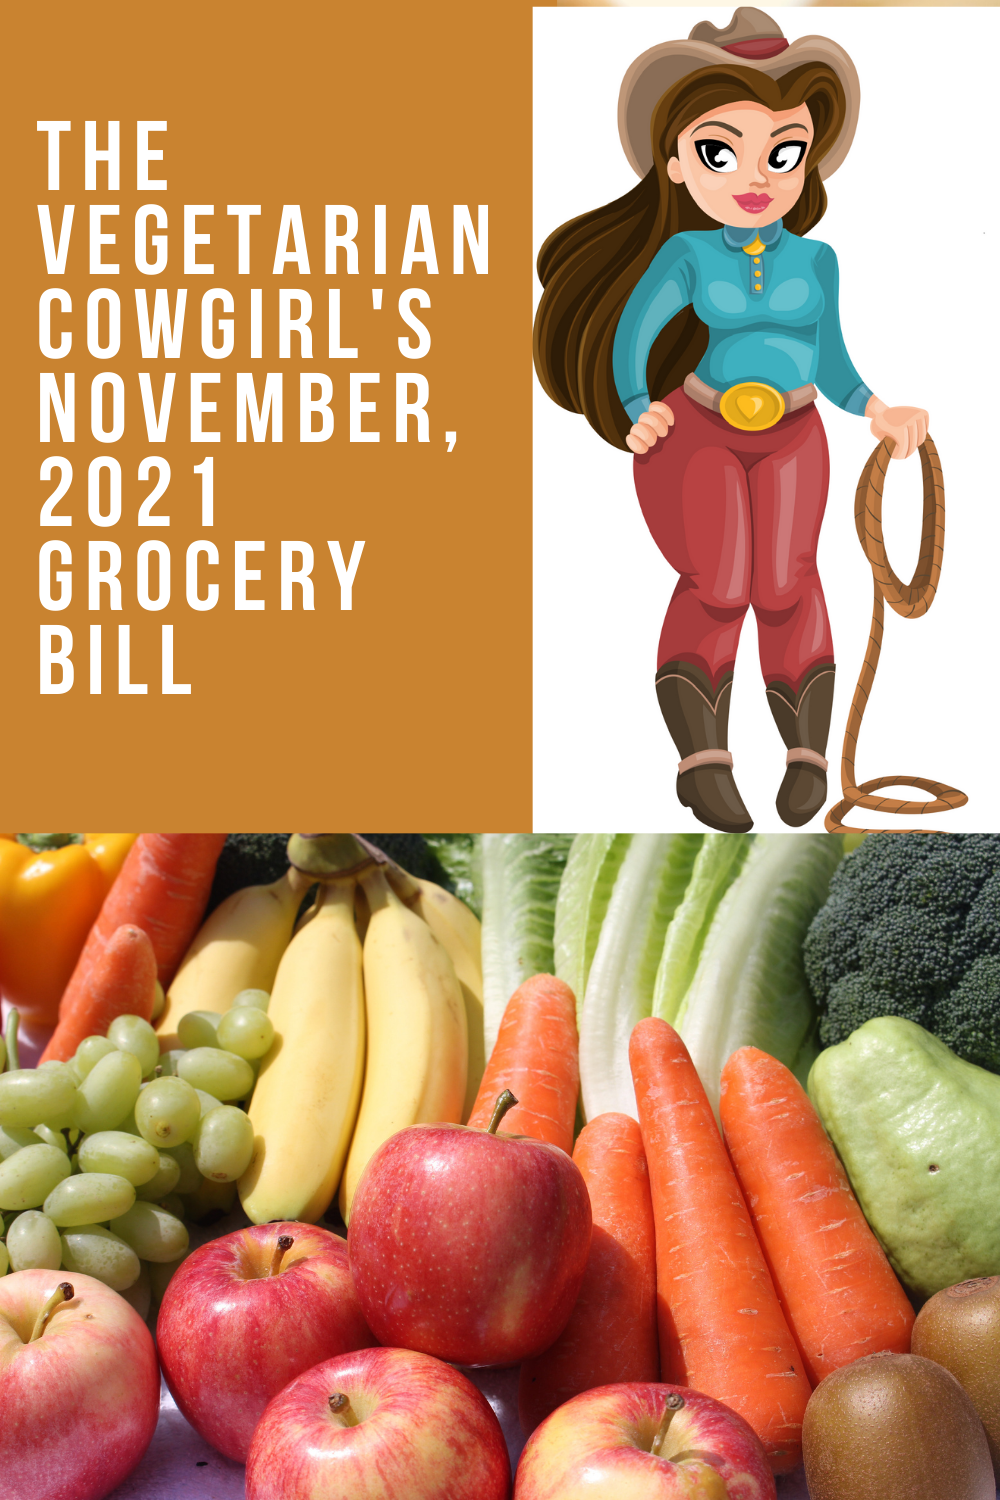 The Vegetarian Cowgirl's November 2021 Grocery Bill